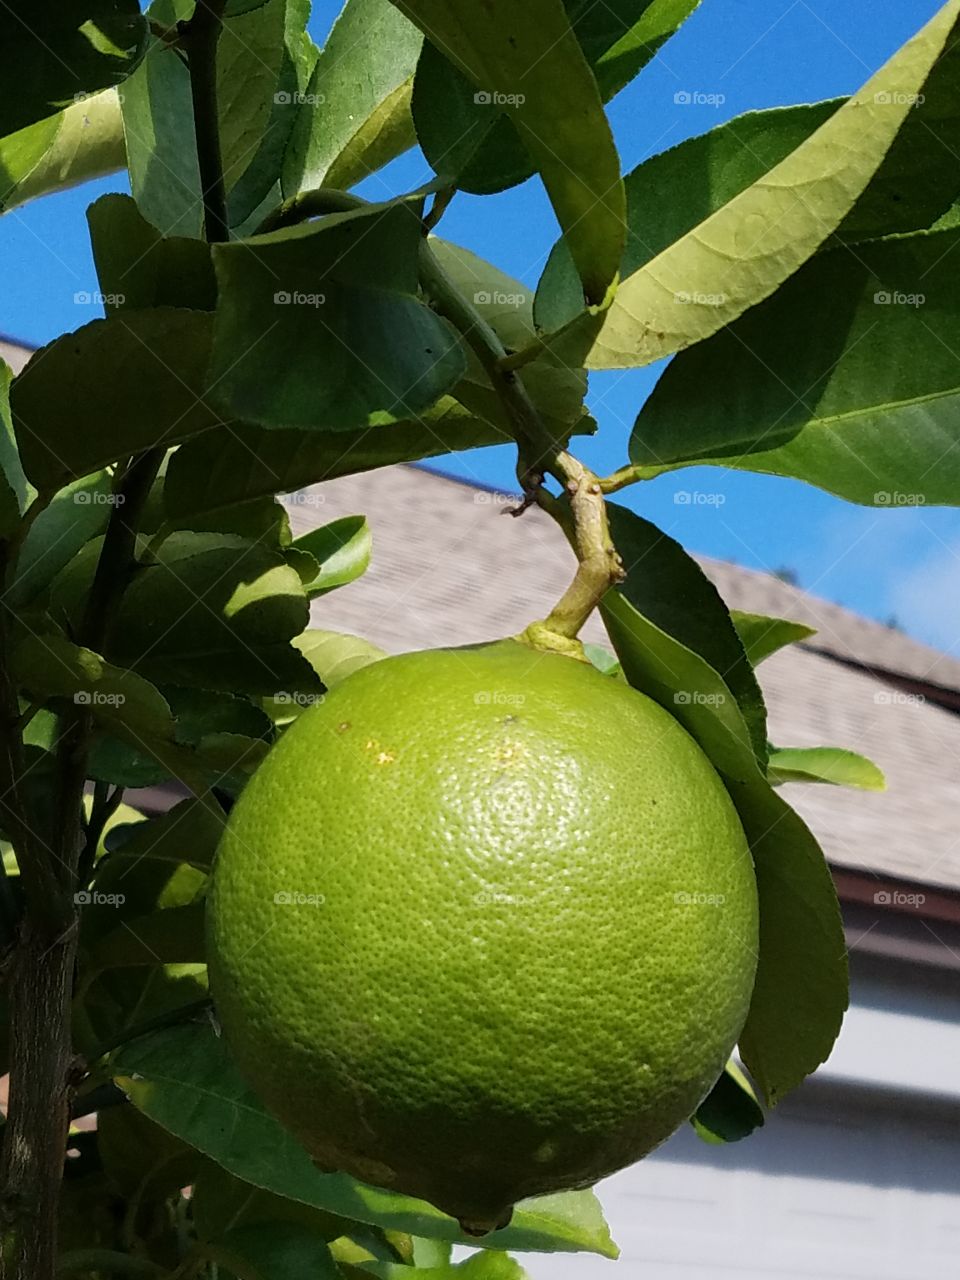 Florida citrus limes